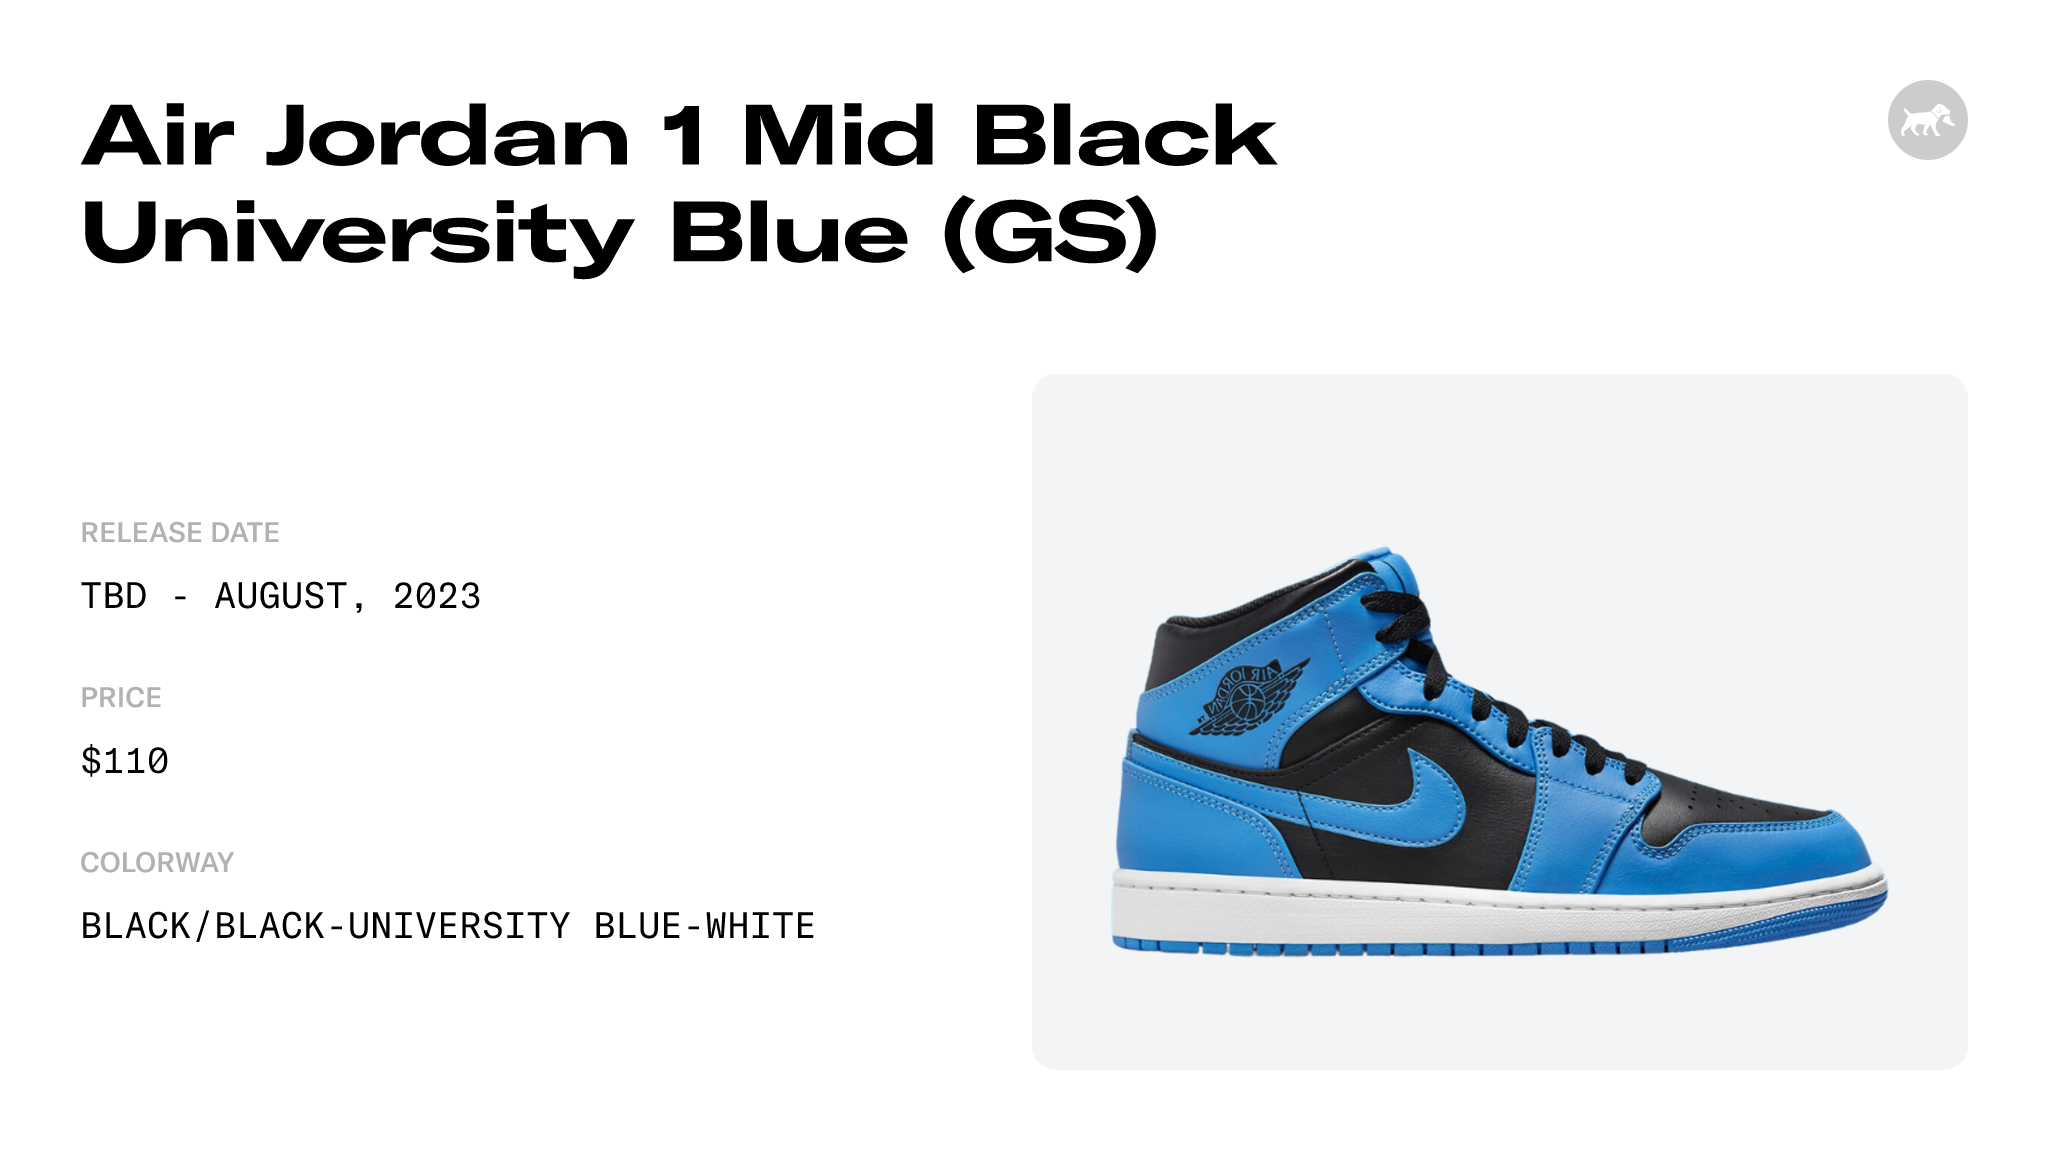 Air Jordan 1 Mid Black University Blue (GS) - DQ8423-401 Raffles and  Release Date